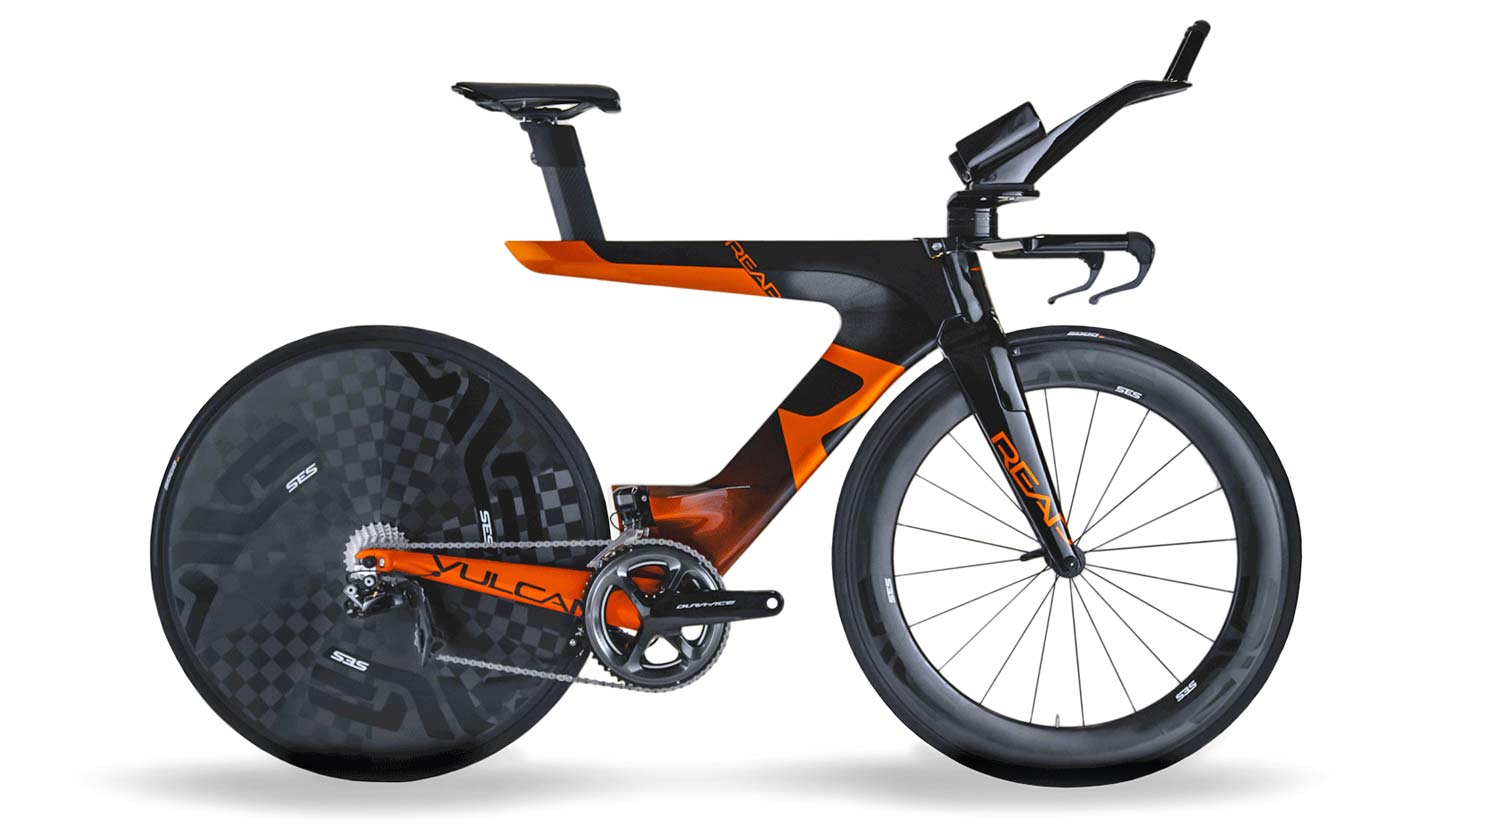 Reap Vulcan tri bike, UK-made carbon rim-brake triathlon beam bike, complete